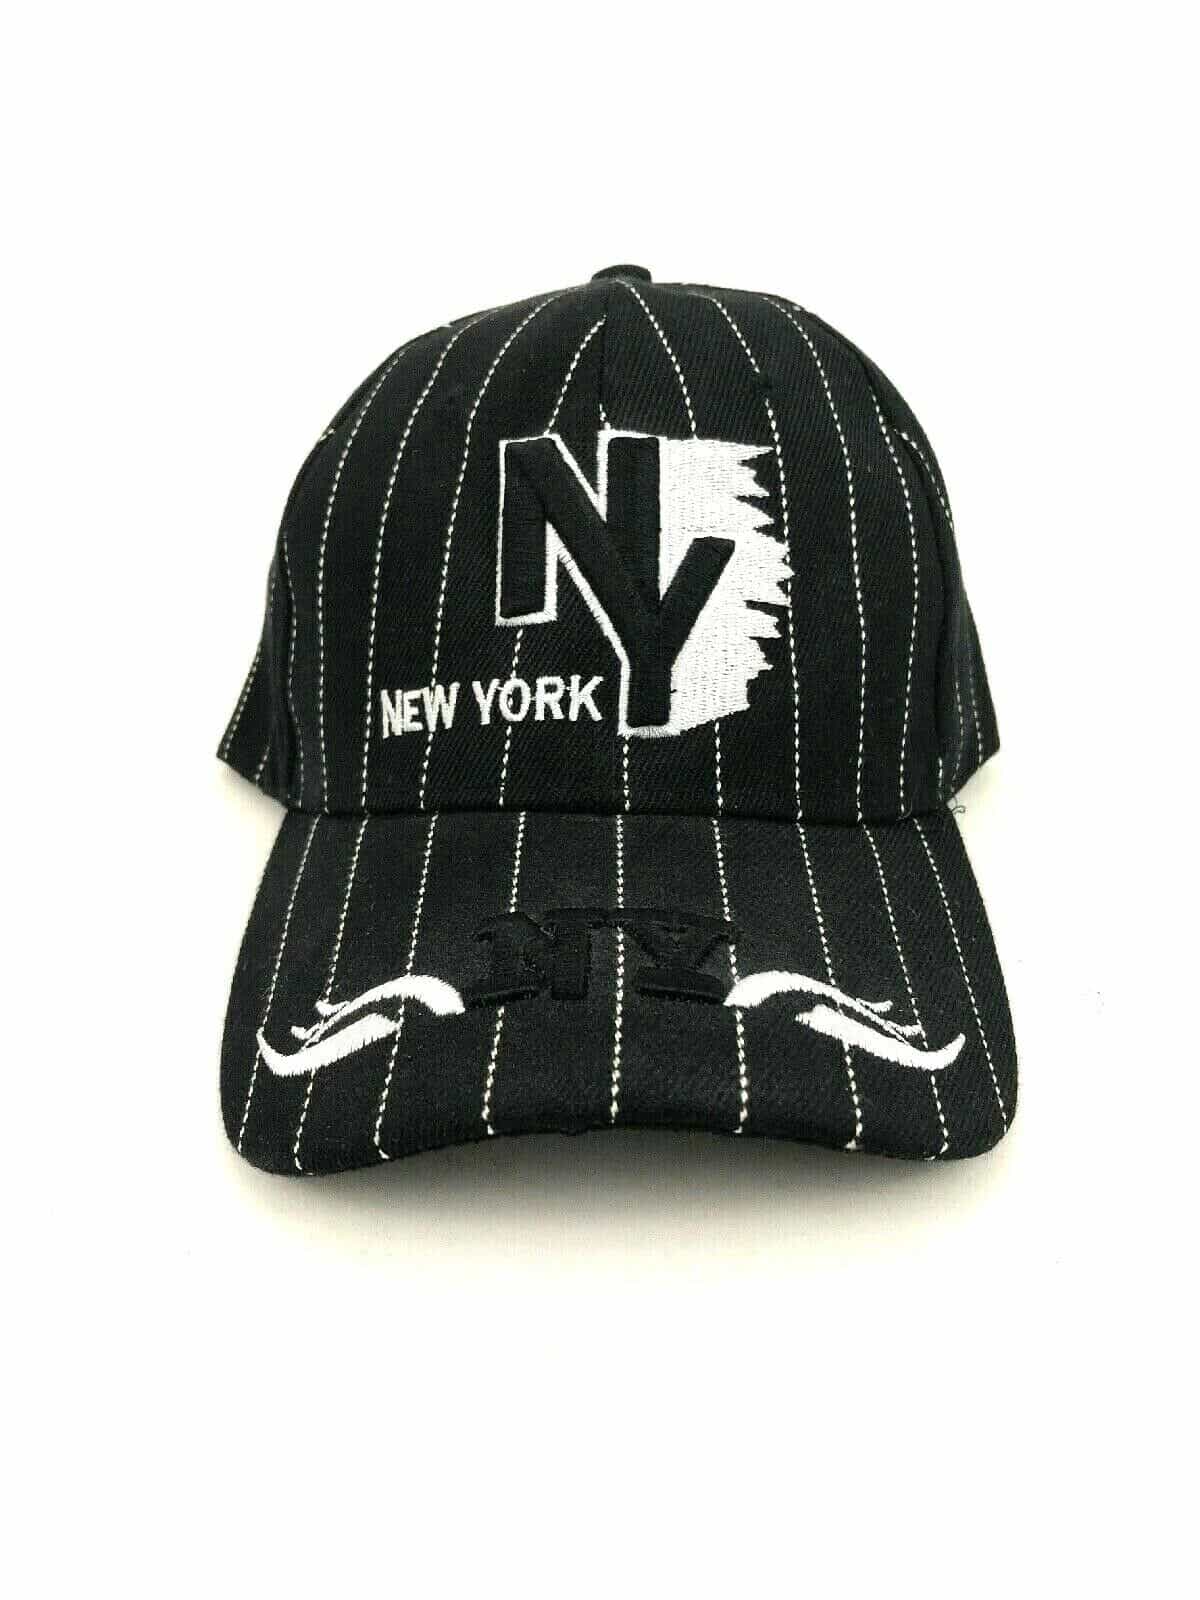 Men’s New York NY Baseball Hat Cap Black